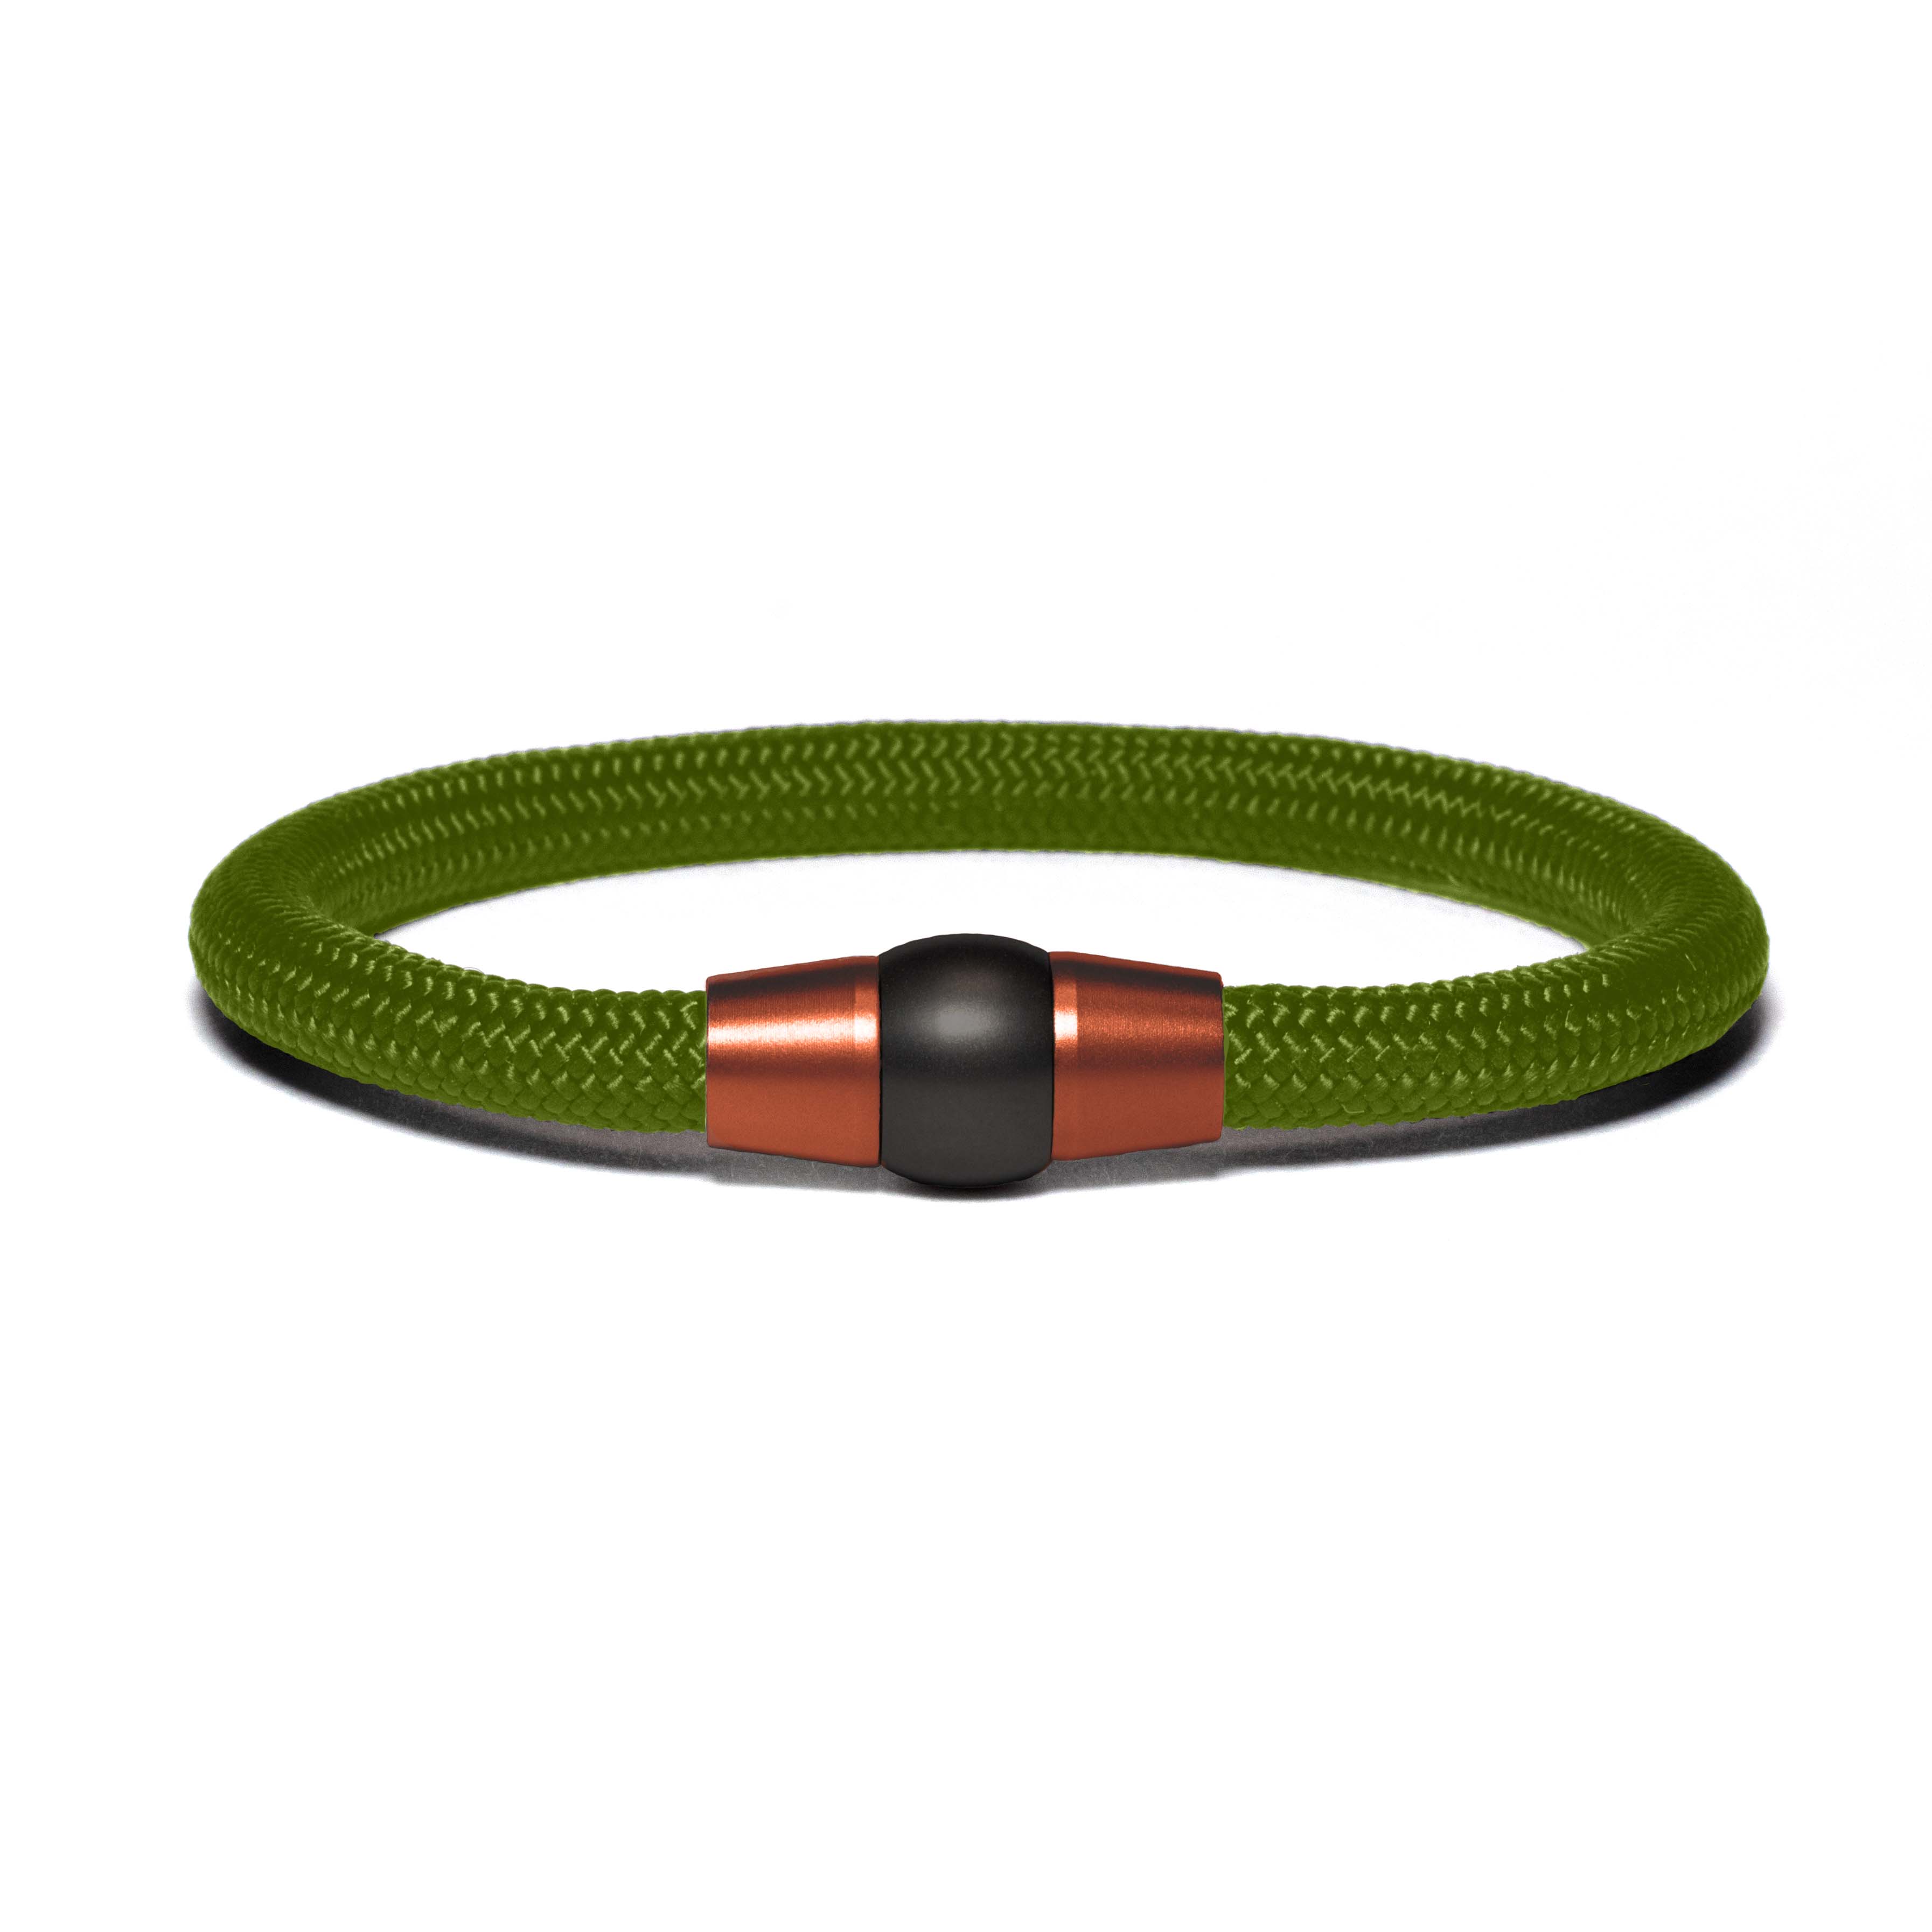 Copper PVD bracelet - olive green paracord